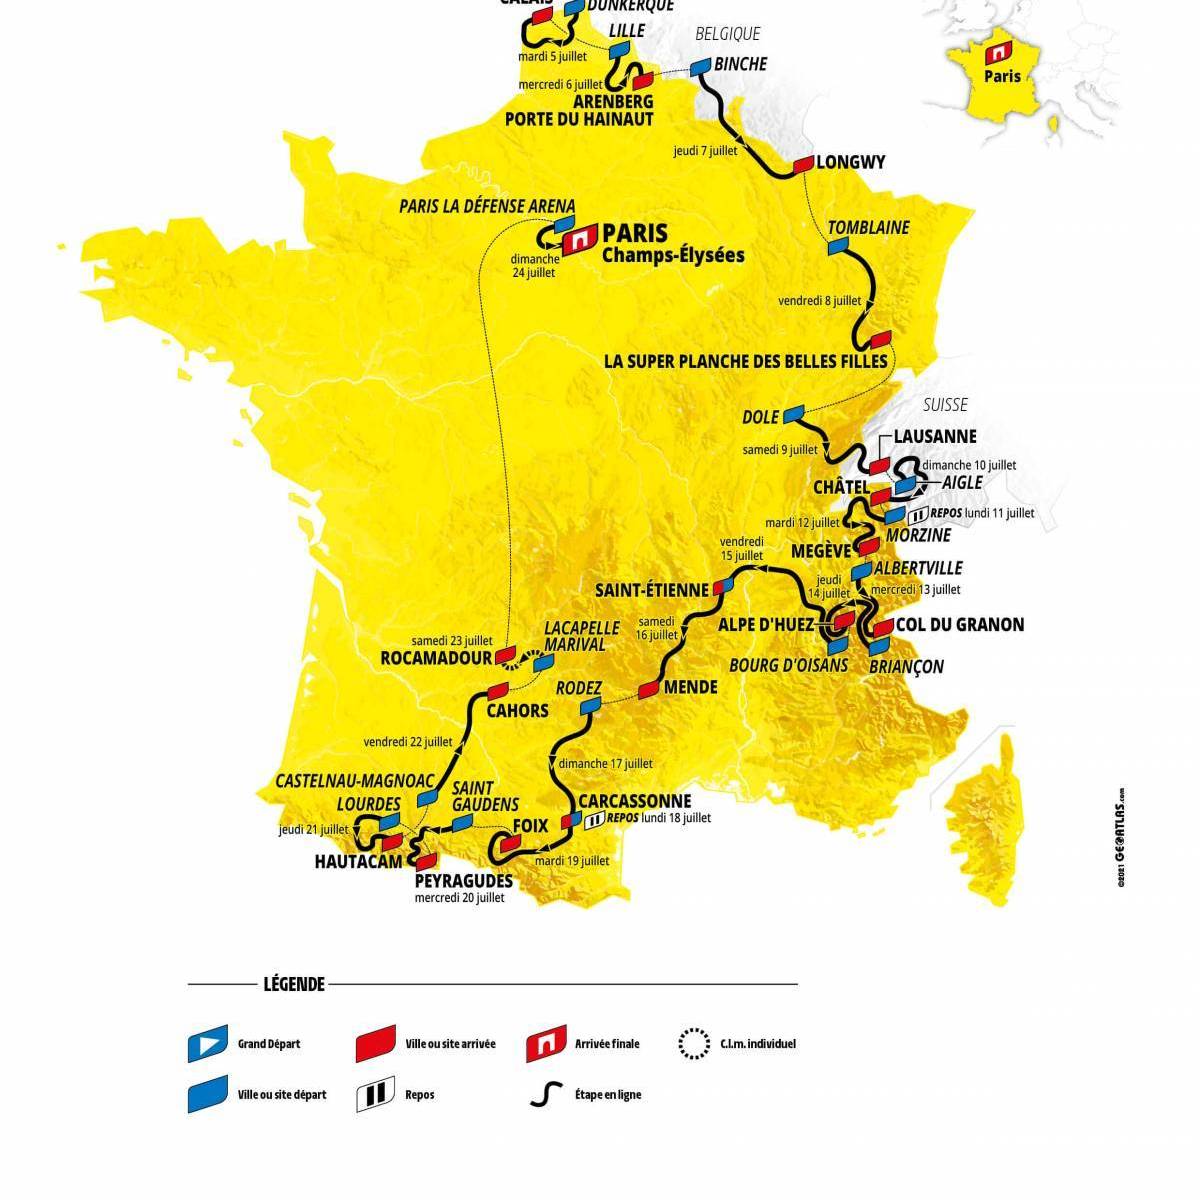 Tour de France 2022: Die komplette Strecke mit allen Etappen im Profil